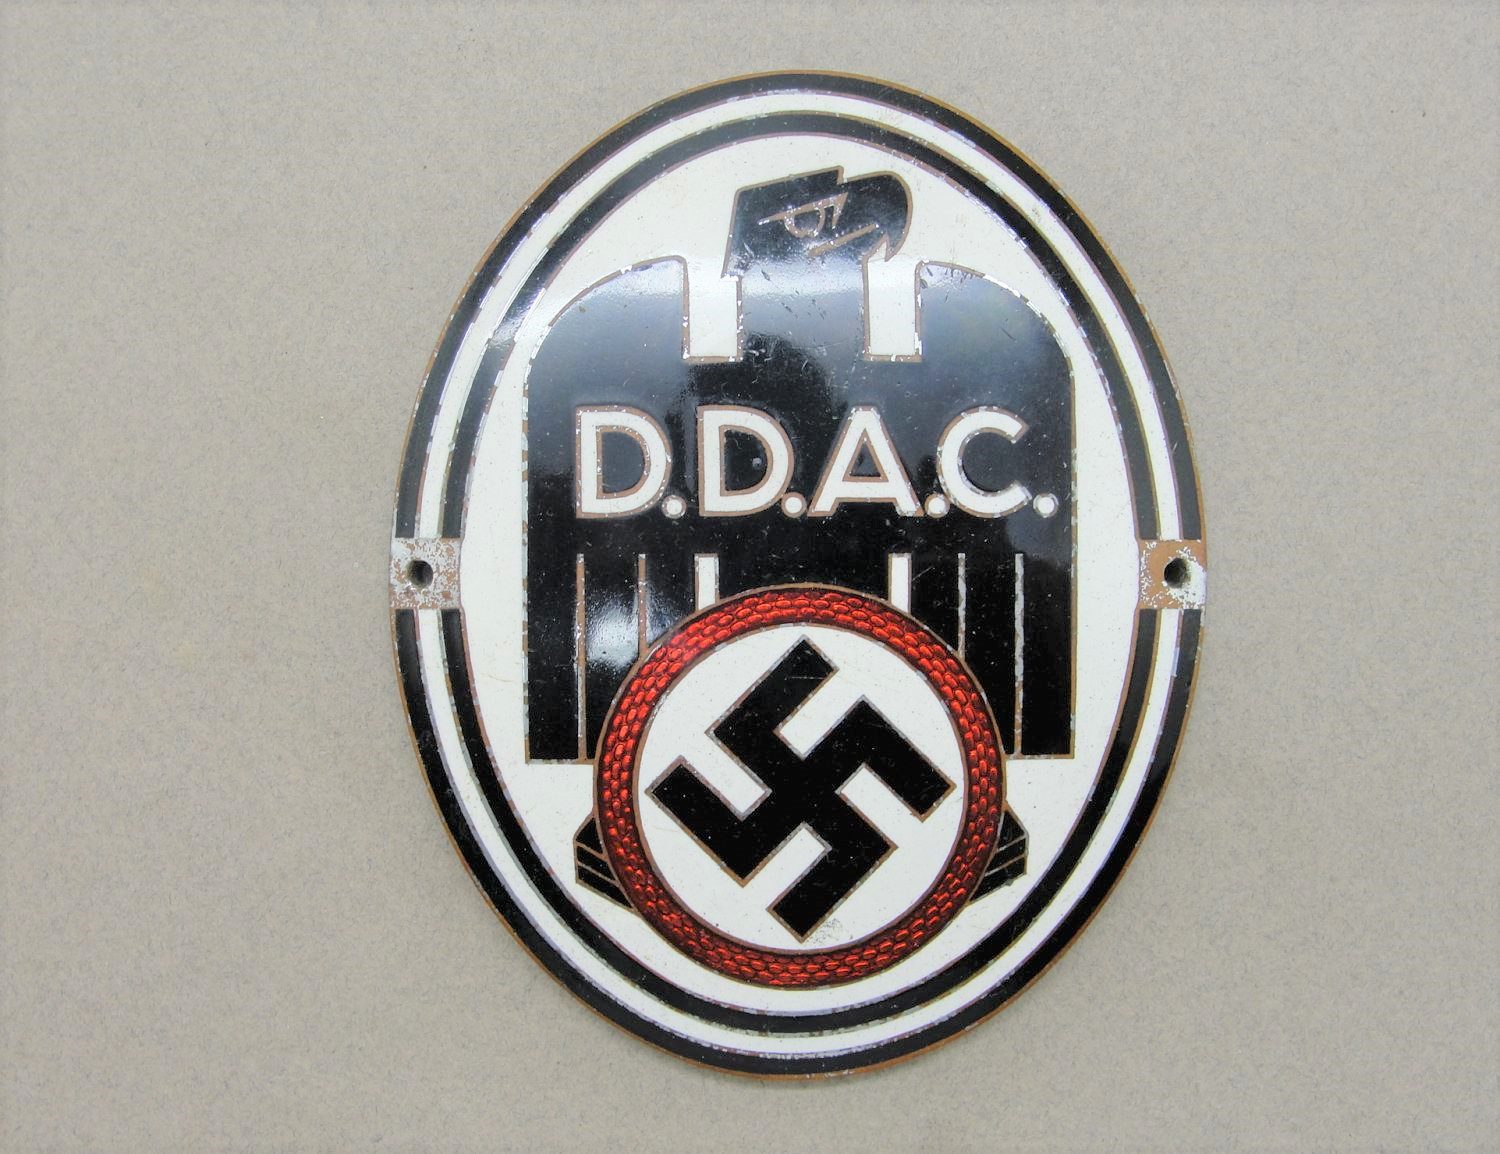 File:D.D.A.C. Der Deutsche Automobil-Club. German Third Reich Motor Club  enamelled car plate. Nazi eagle-and-swastika emblem (logotype of the  Automobile association). Hjemmefrontmuseet Rakkestad, Norway 2021-06-20 IMG  5403.jpg - Wikimedia Commons